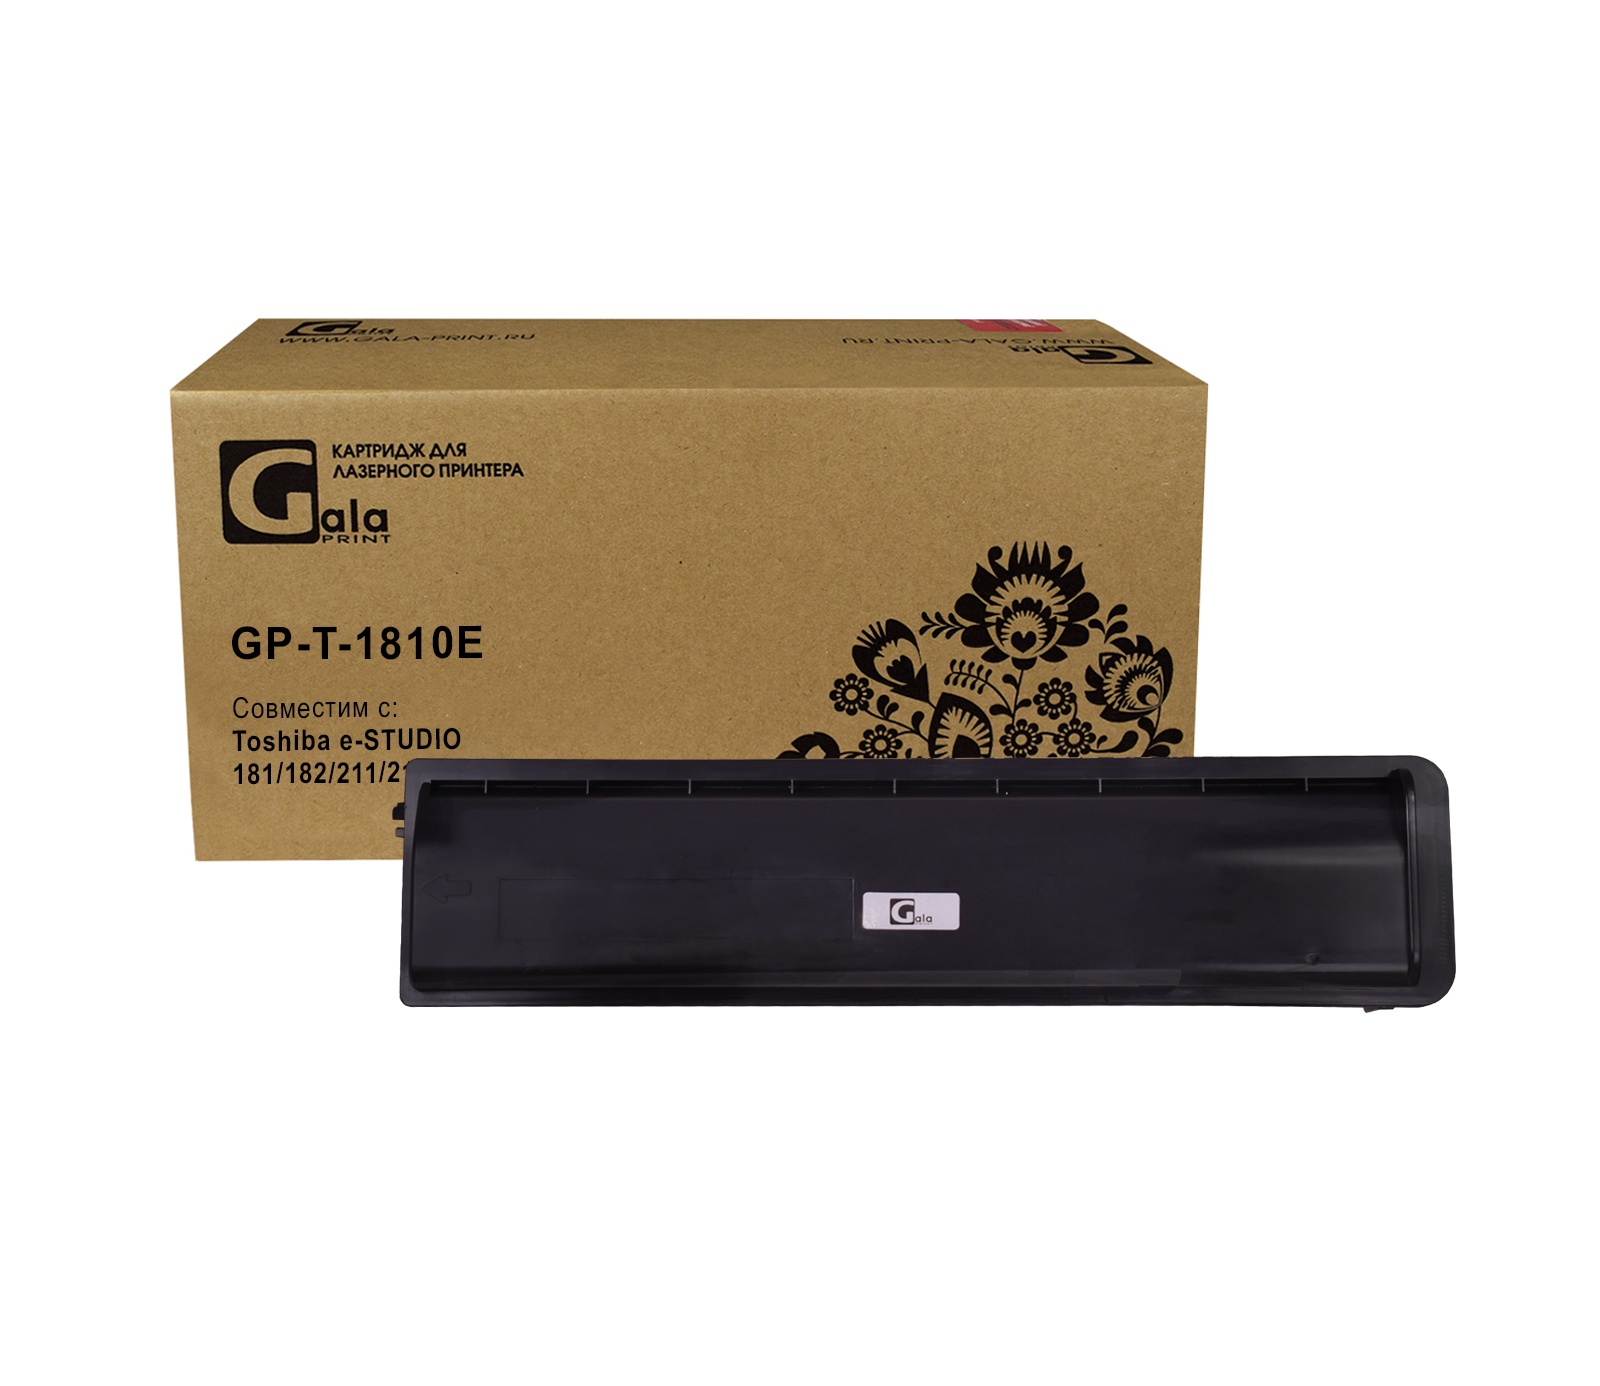 Картридж GP-T-1810E для принтеров Toshiba e-STUDIO 181/182/211/212/242 24500 копий GalaPrint